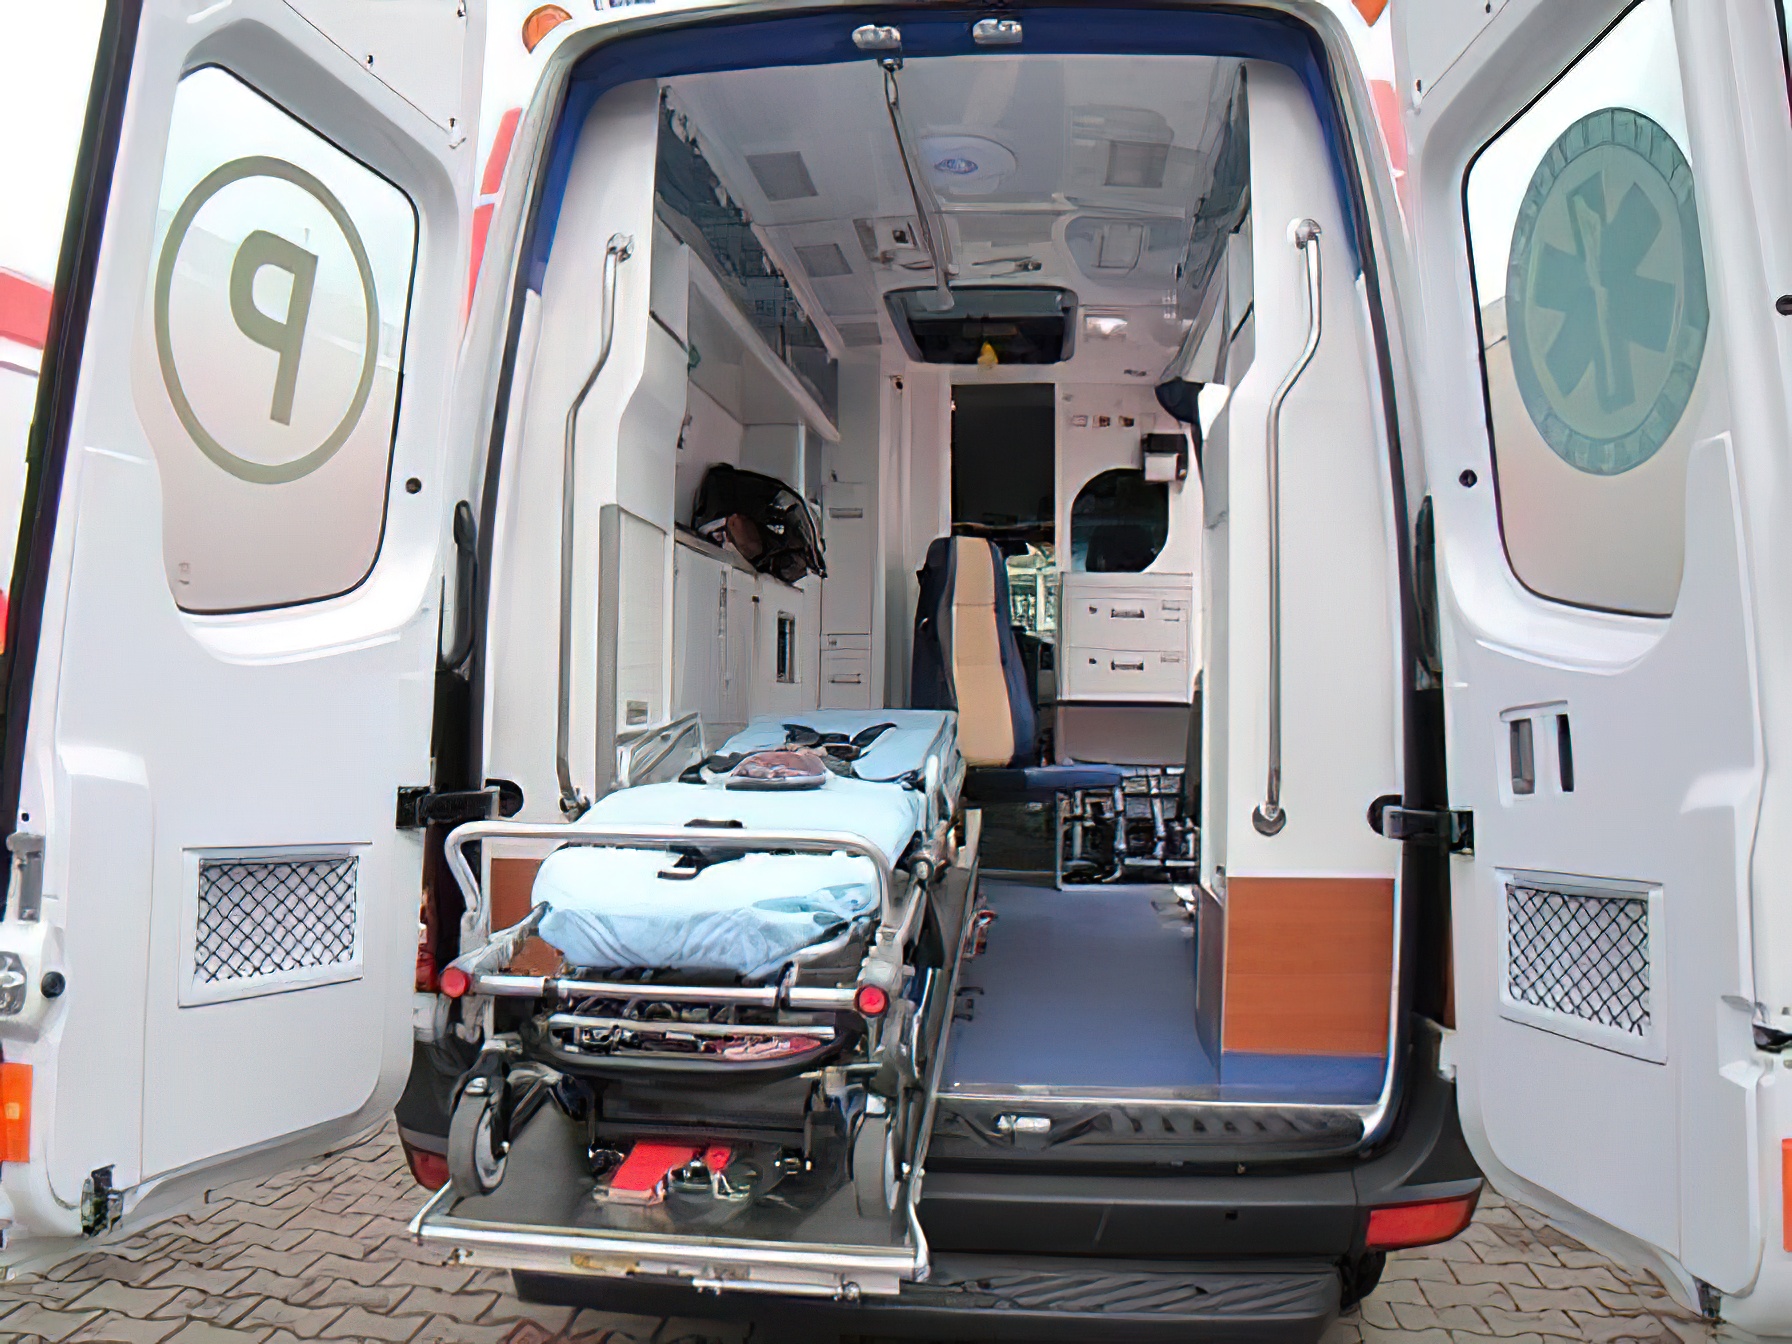 Kalejdoskop / Ambulans Latowicza